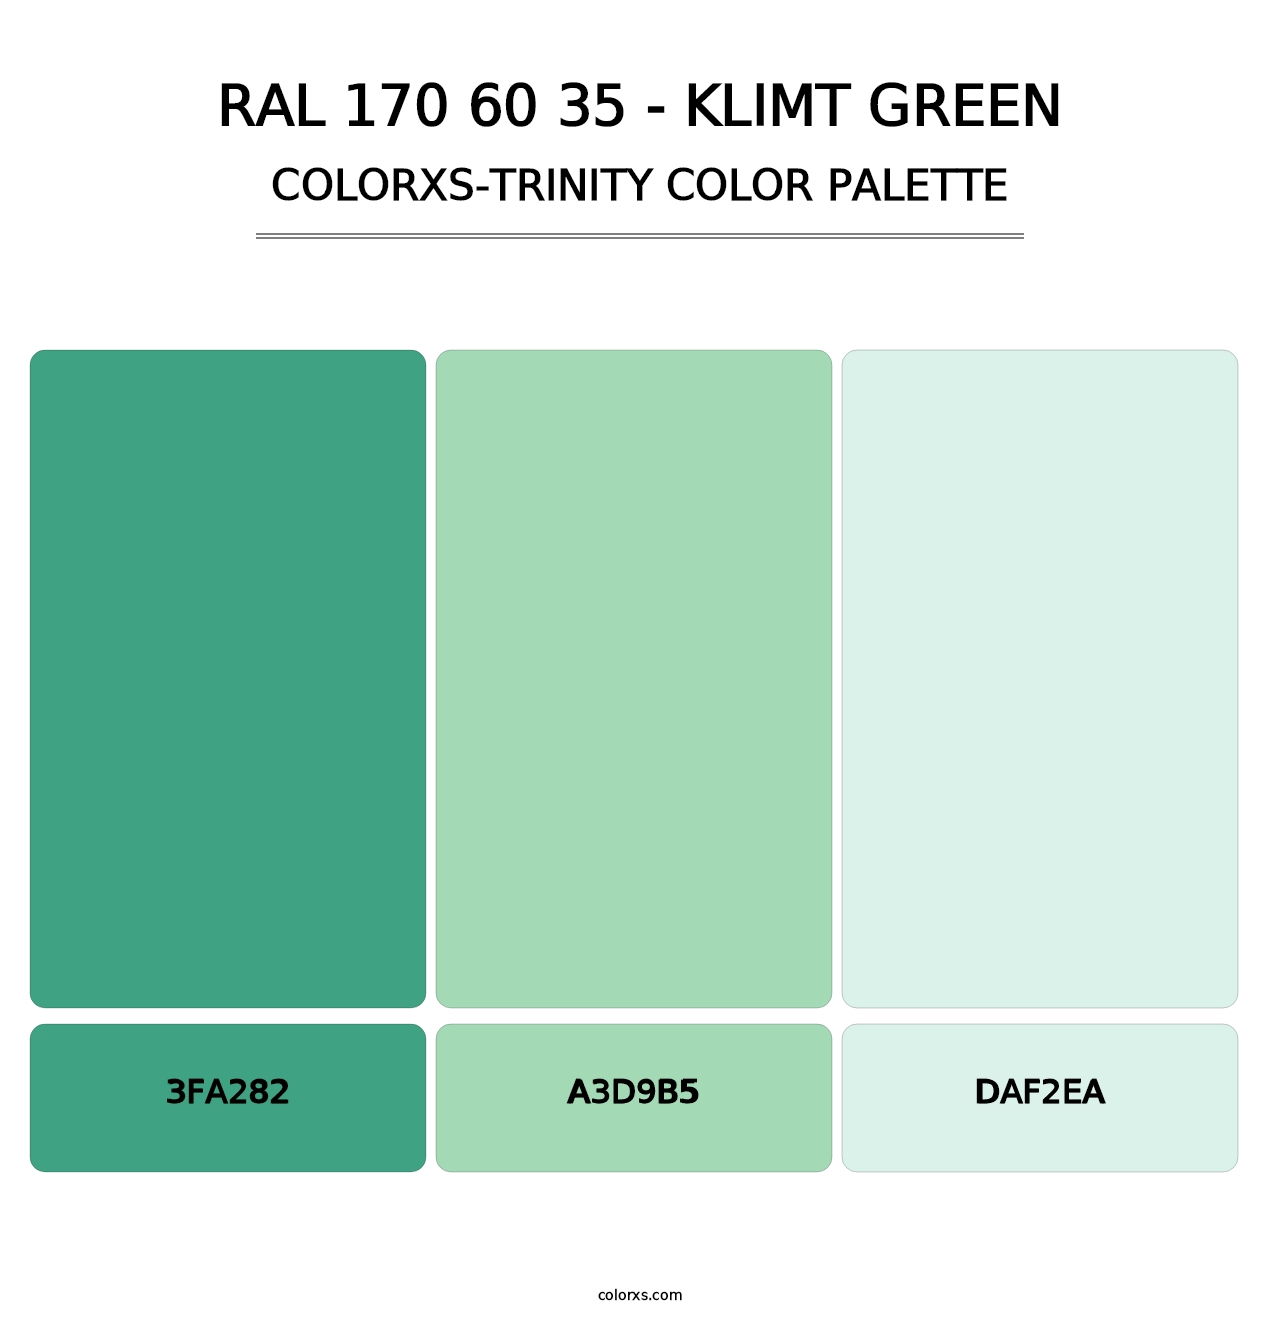 RAL 170 60 35 - Klimt Green - Colorxs Trinity Palette